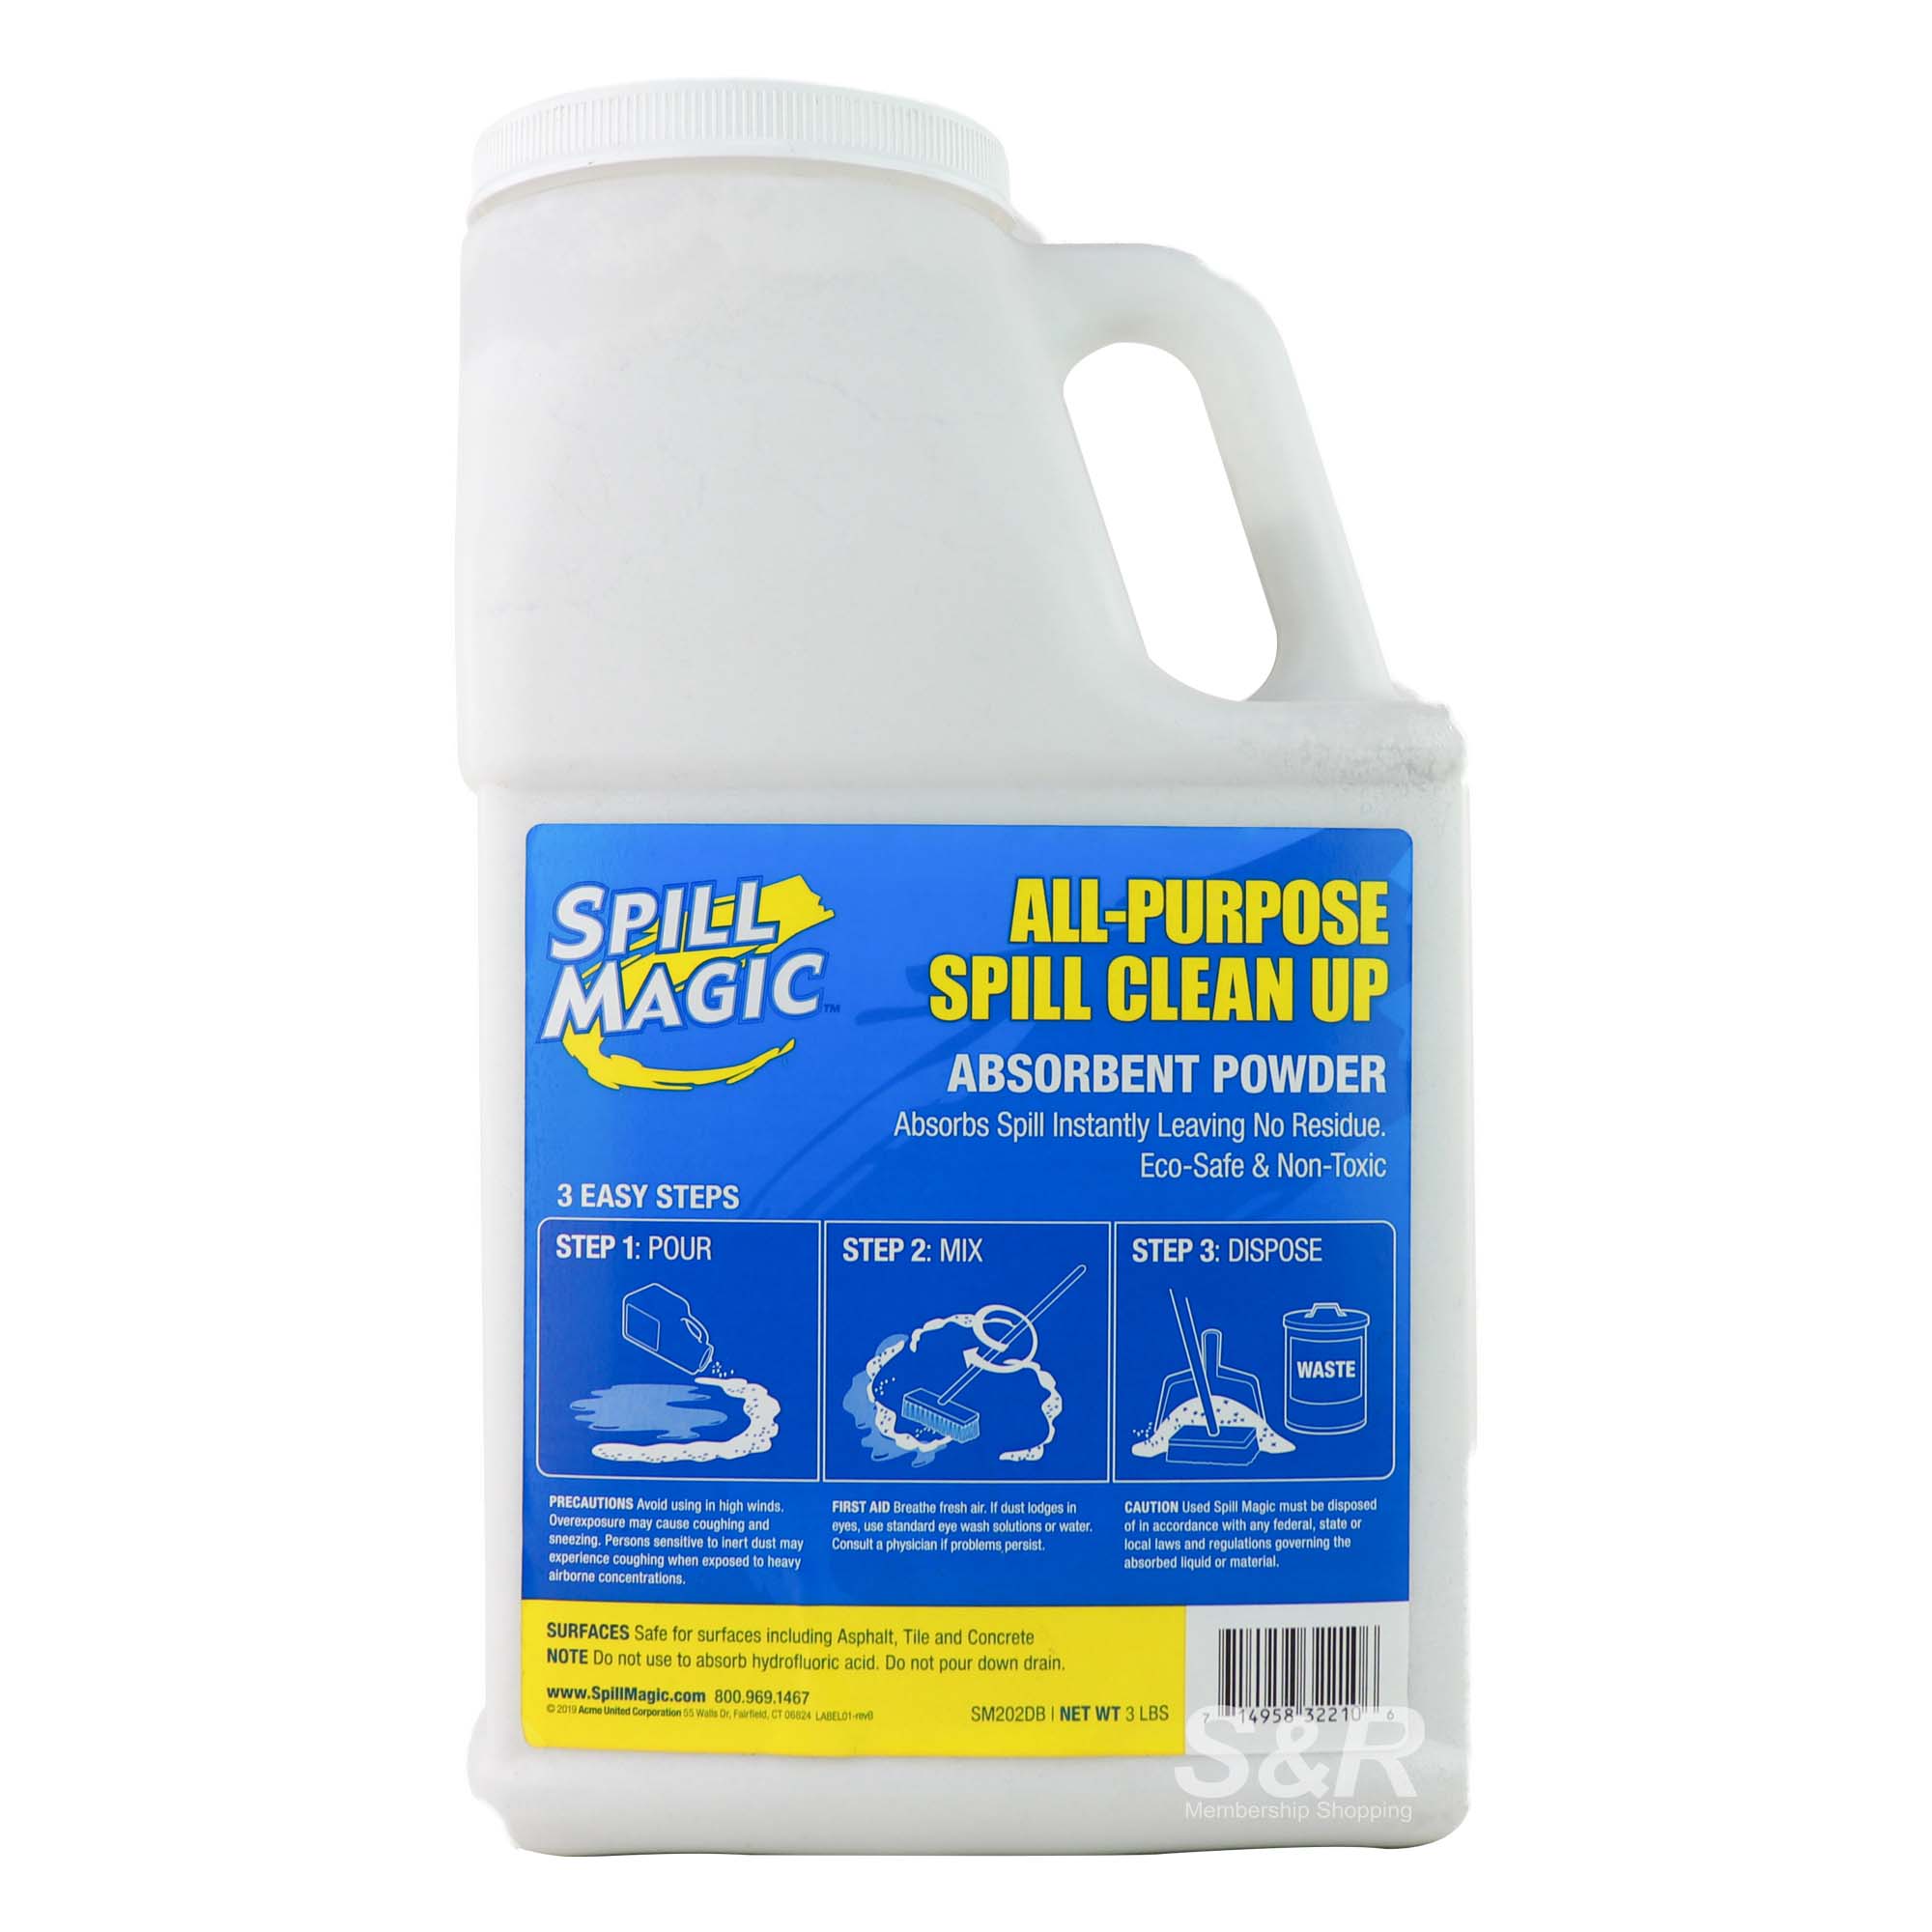 Spill Magic All-Purpose Spill Clean Up Absorbent Powder 1.36kg